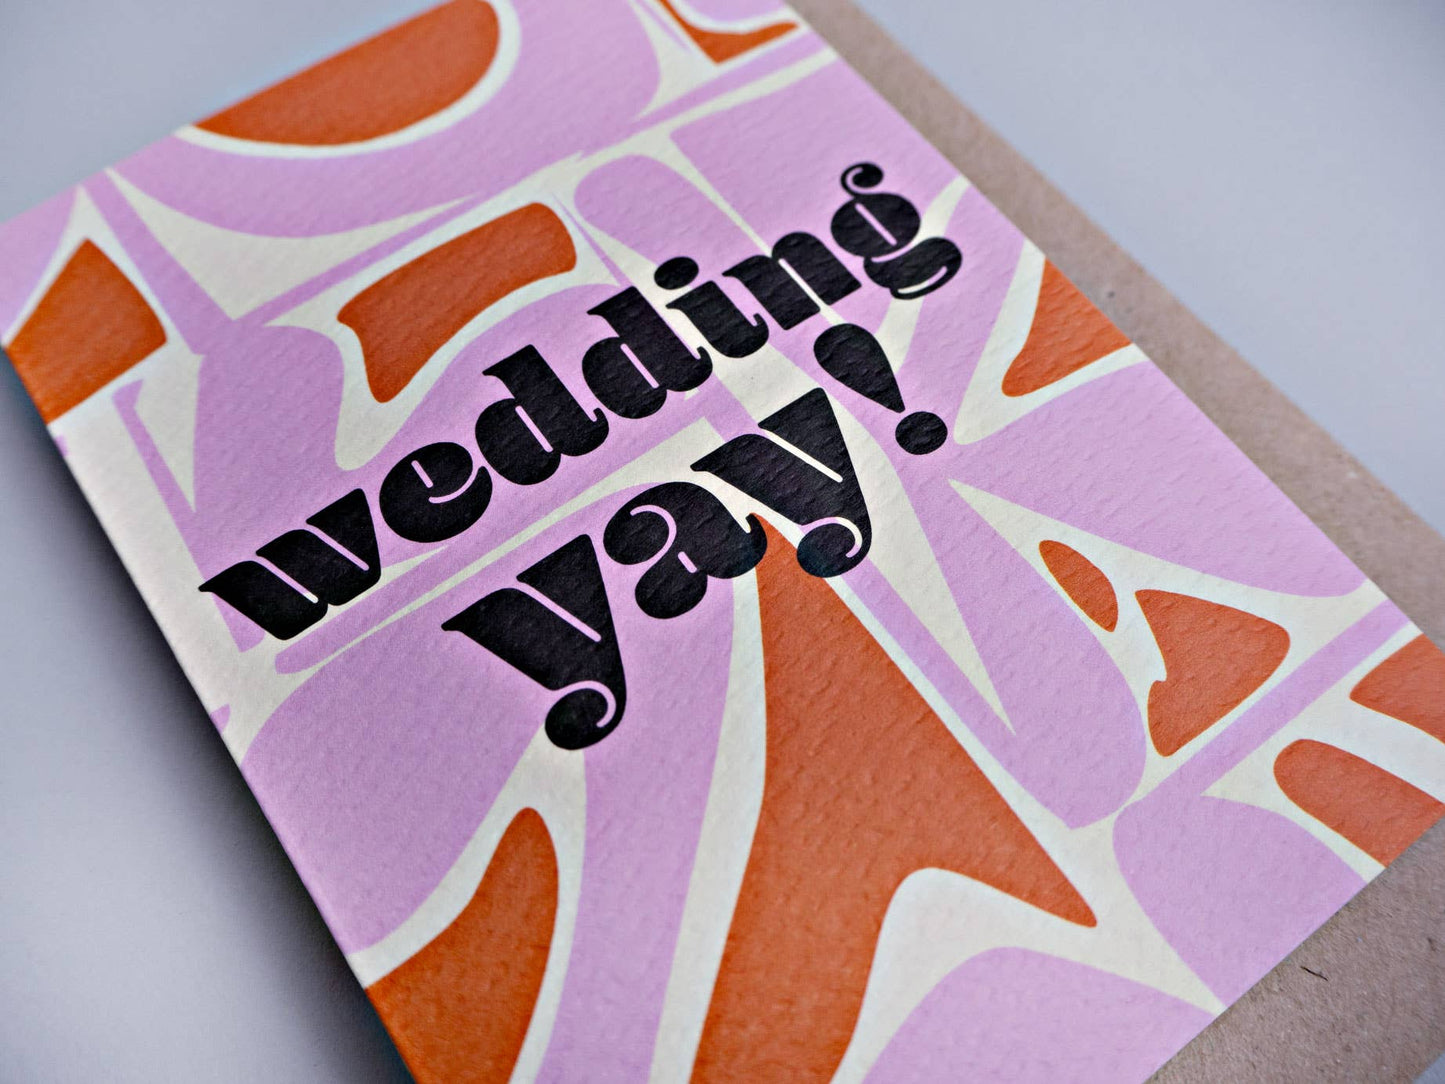 The Completist - Lola Wedding Yay Card